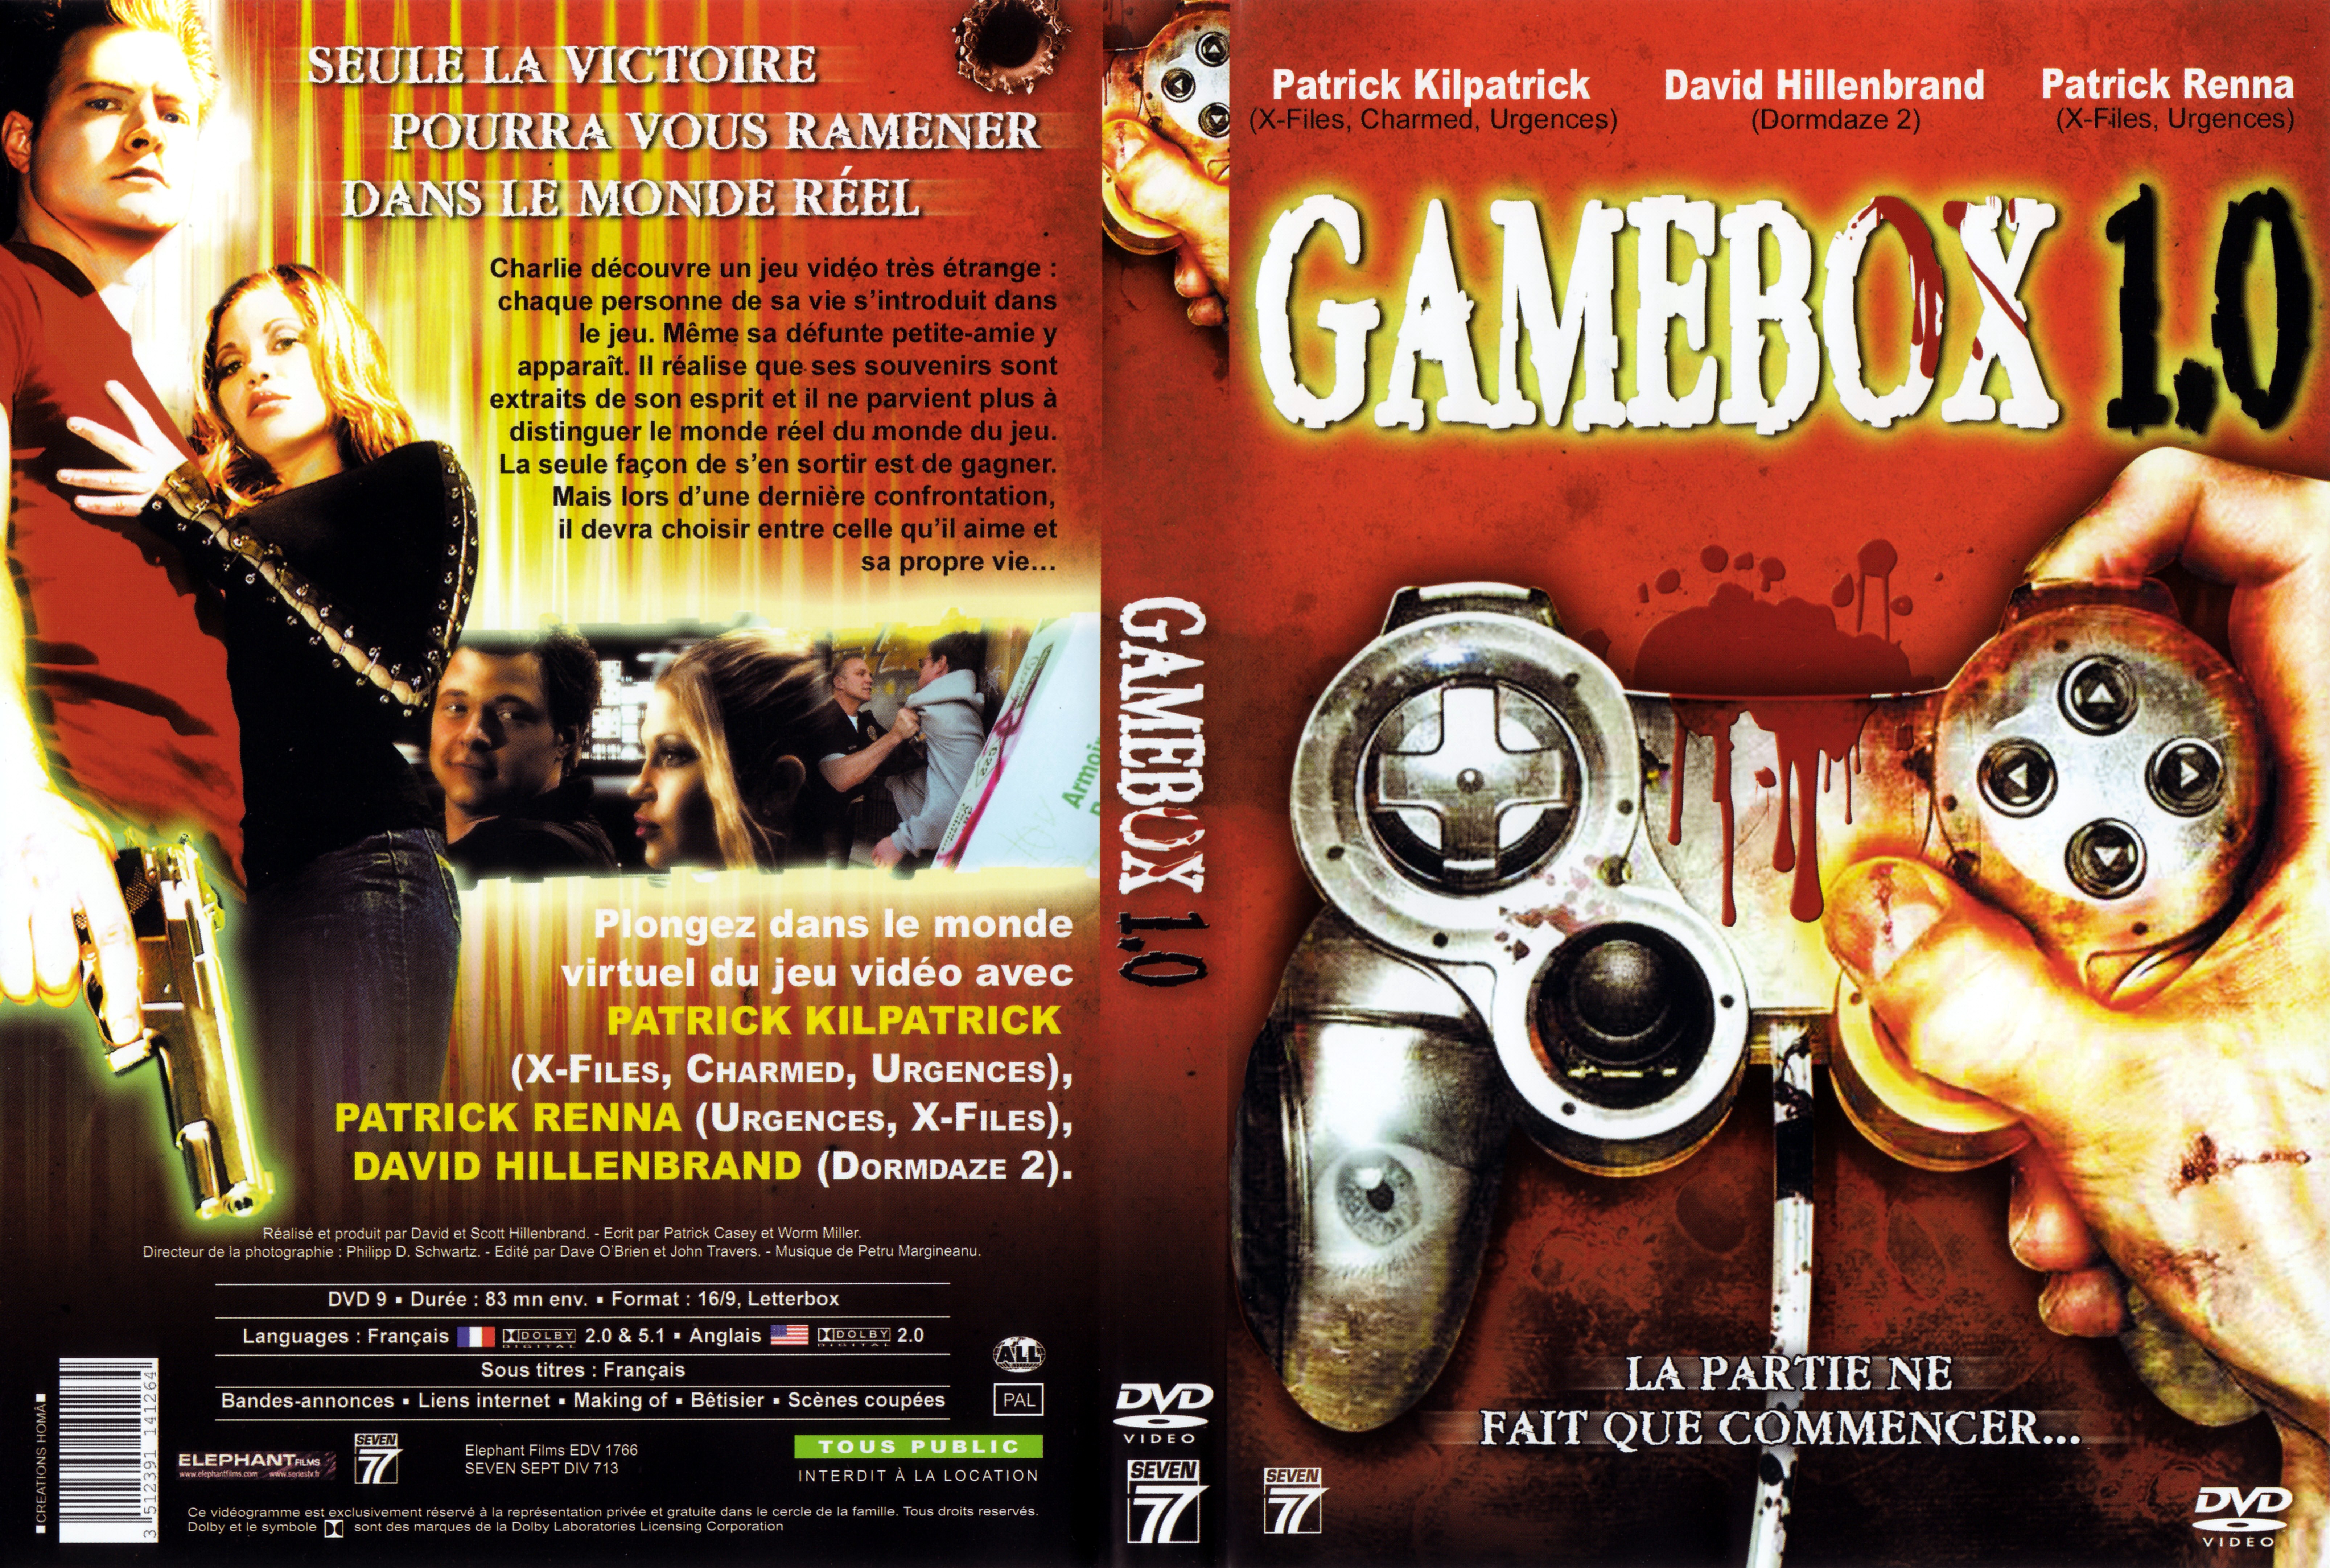 Jaquette DVD Gamebox 1-0